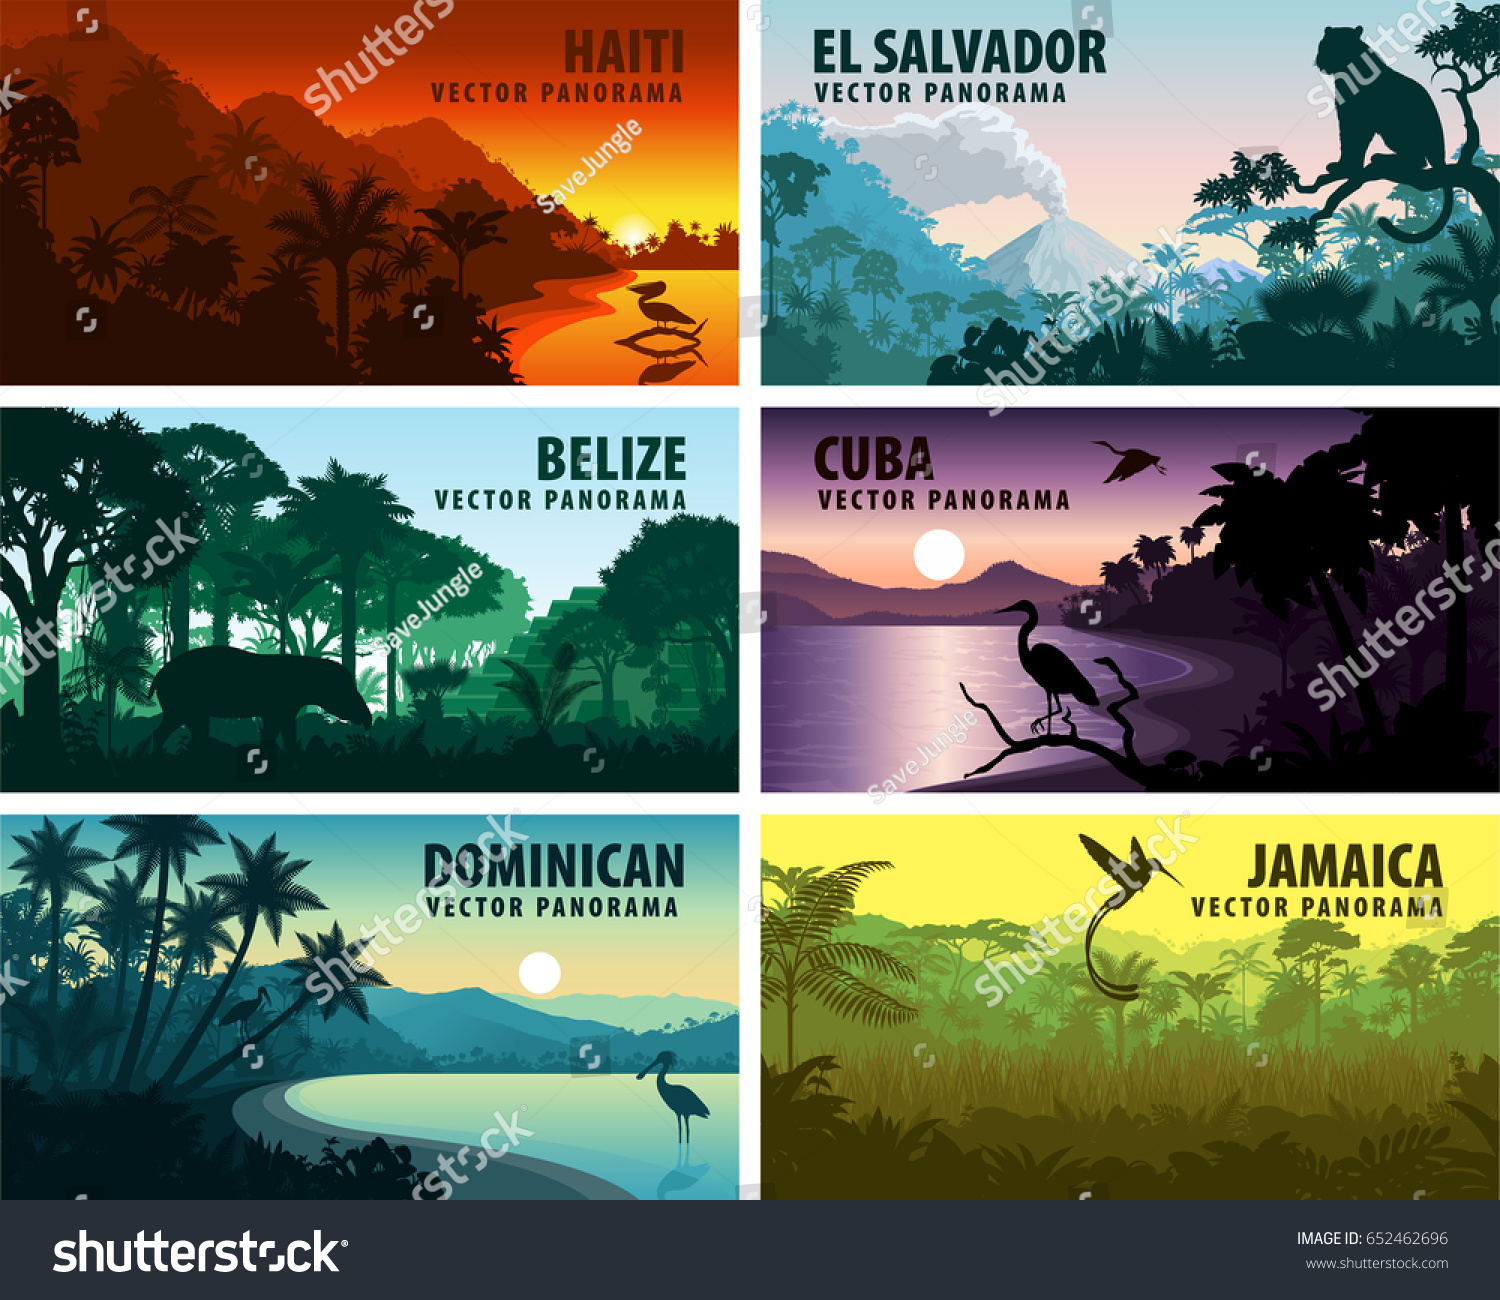 vector set of panoramas countries of caribbean and Central America - Haiti, Jamaica, Dominican, Cuba, El Salvador, Belize. #652462696